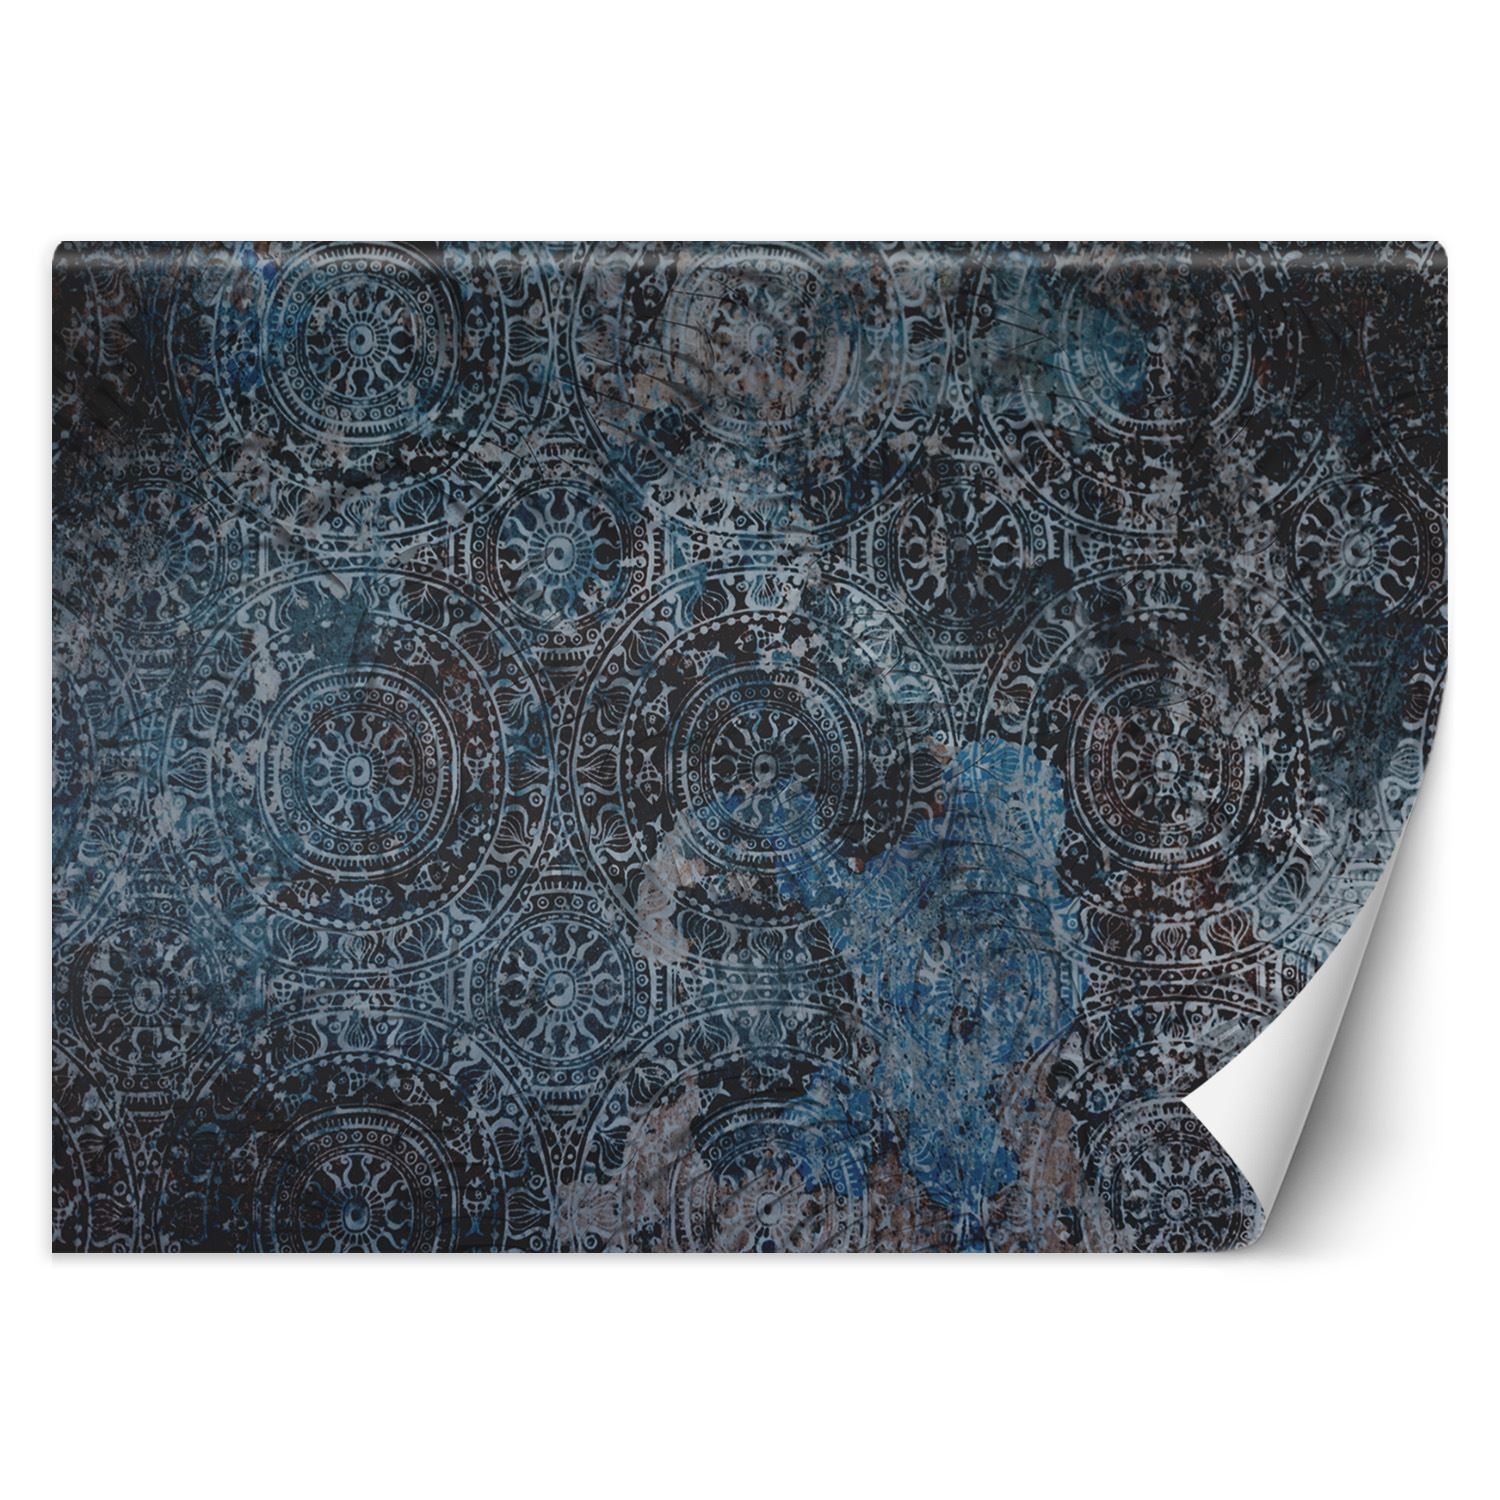 Trend24 – Behang – Mandala Vintage – Behangpapier – Behang Woonkamer – Fotobehang – 250x175x2 cm – Incl. behanglijm